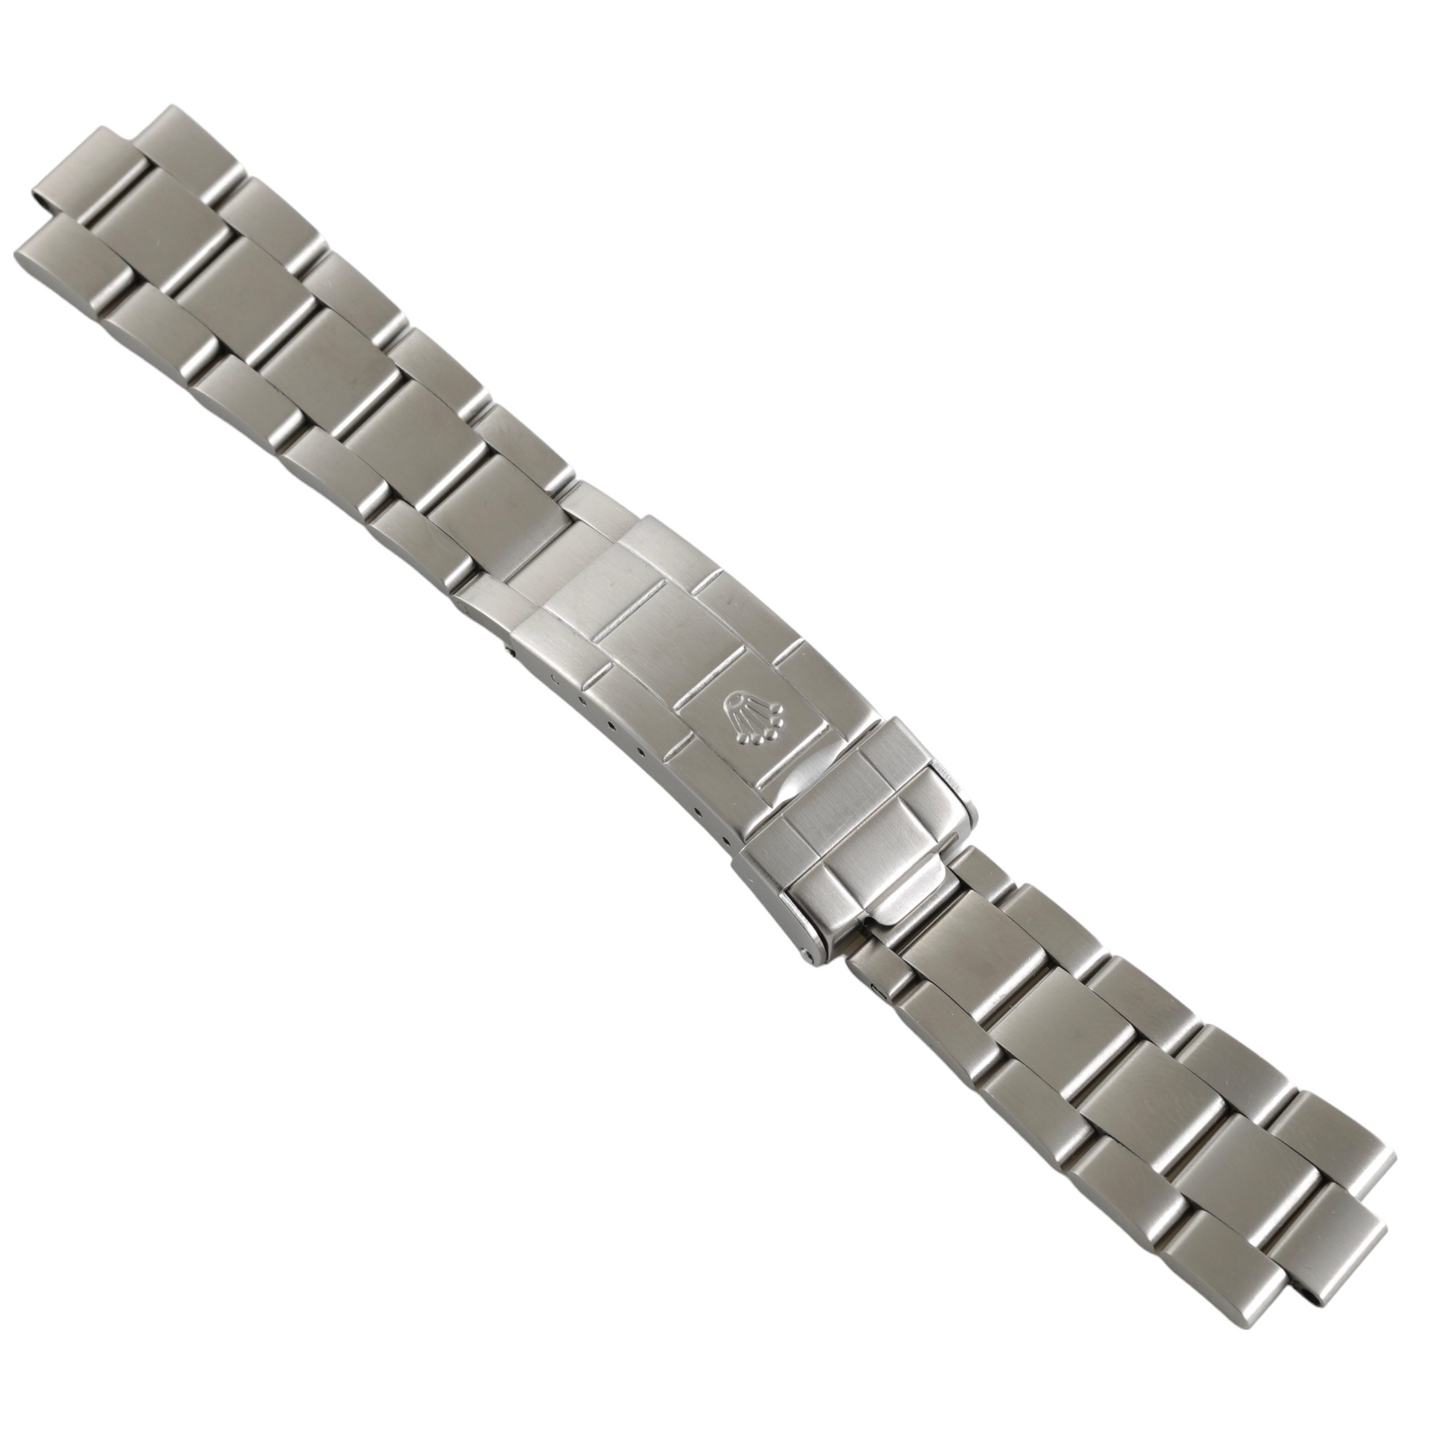 Rolex Oyster Steel Bracelet /Band/Strap 93250 without links